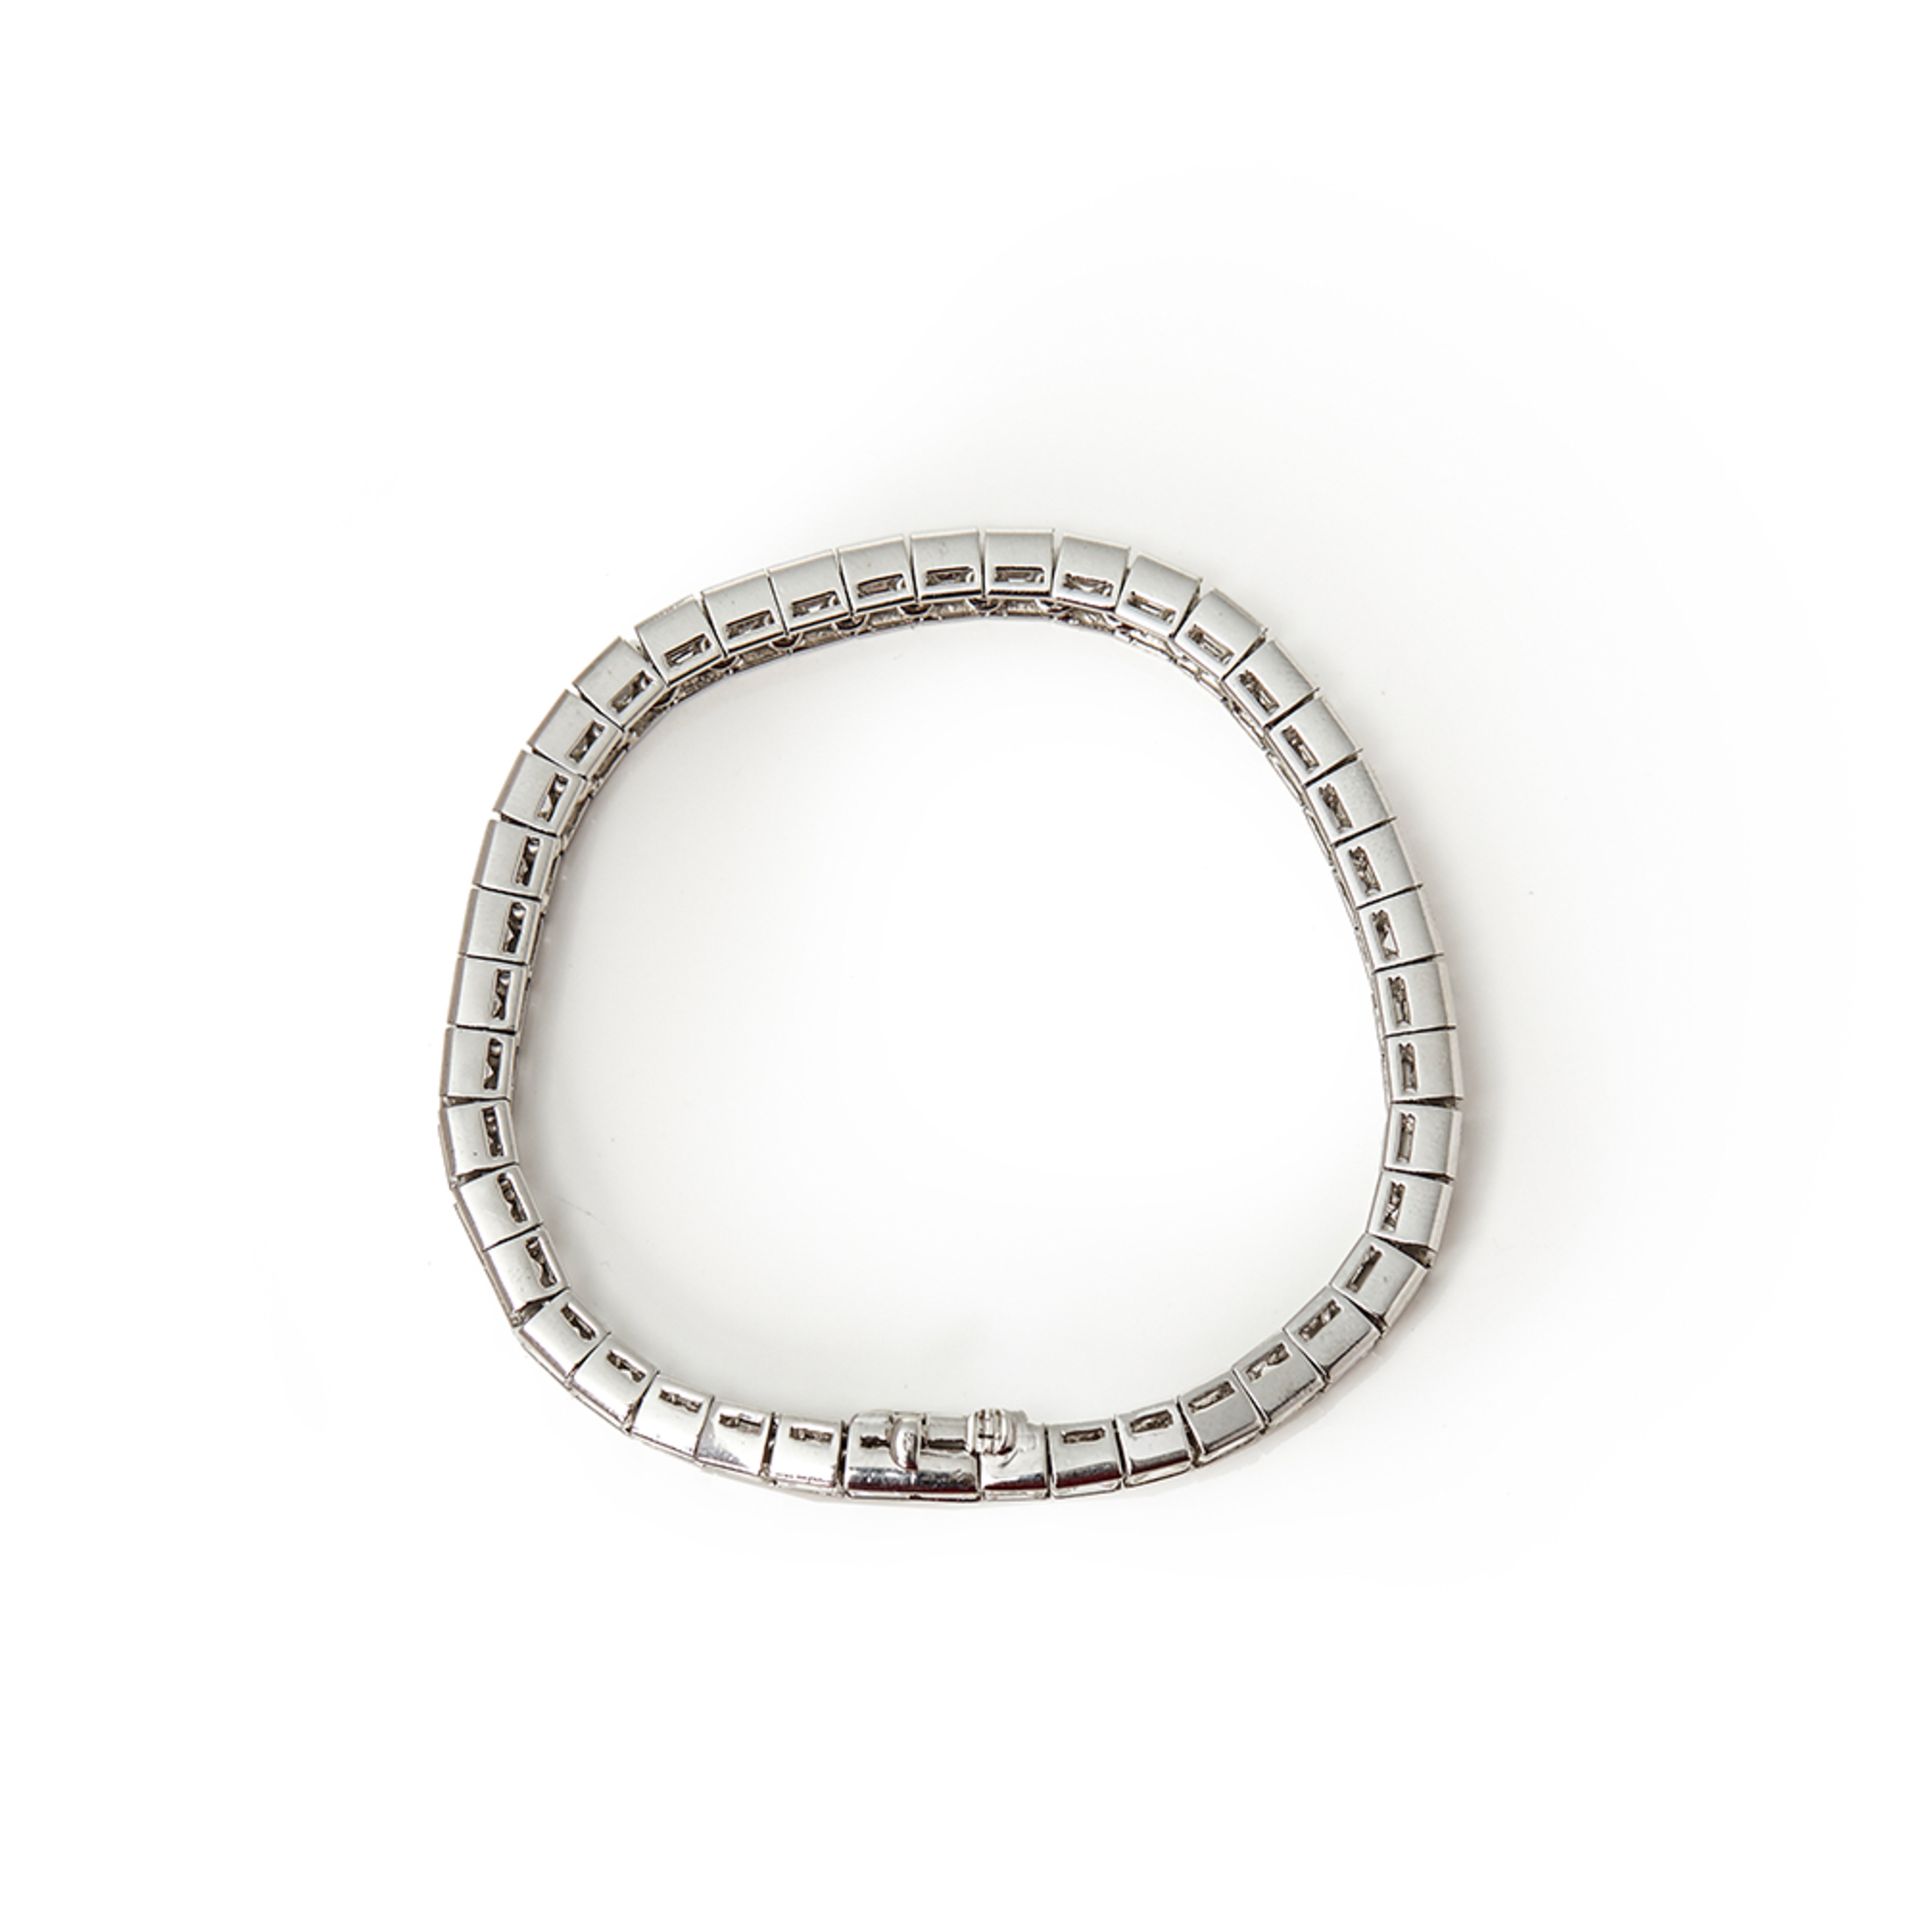 Cartier Platinum Diamond Tennis Bracelet - Image 7 of 12